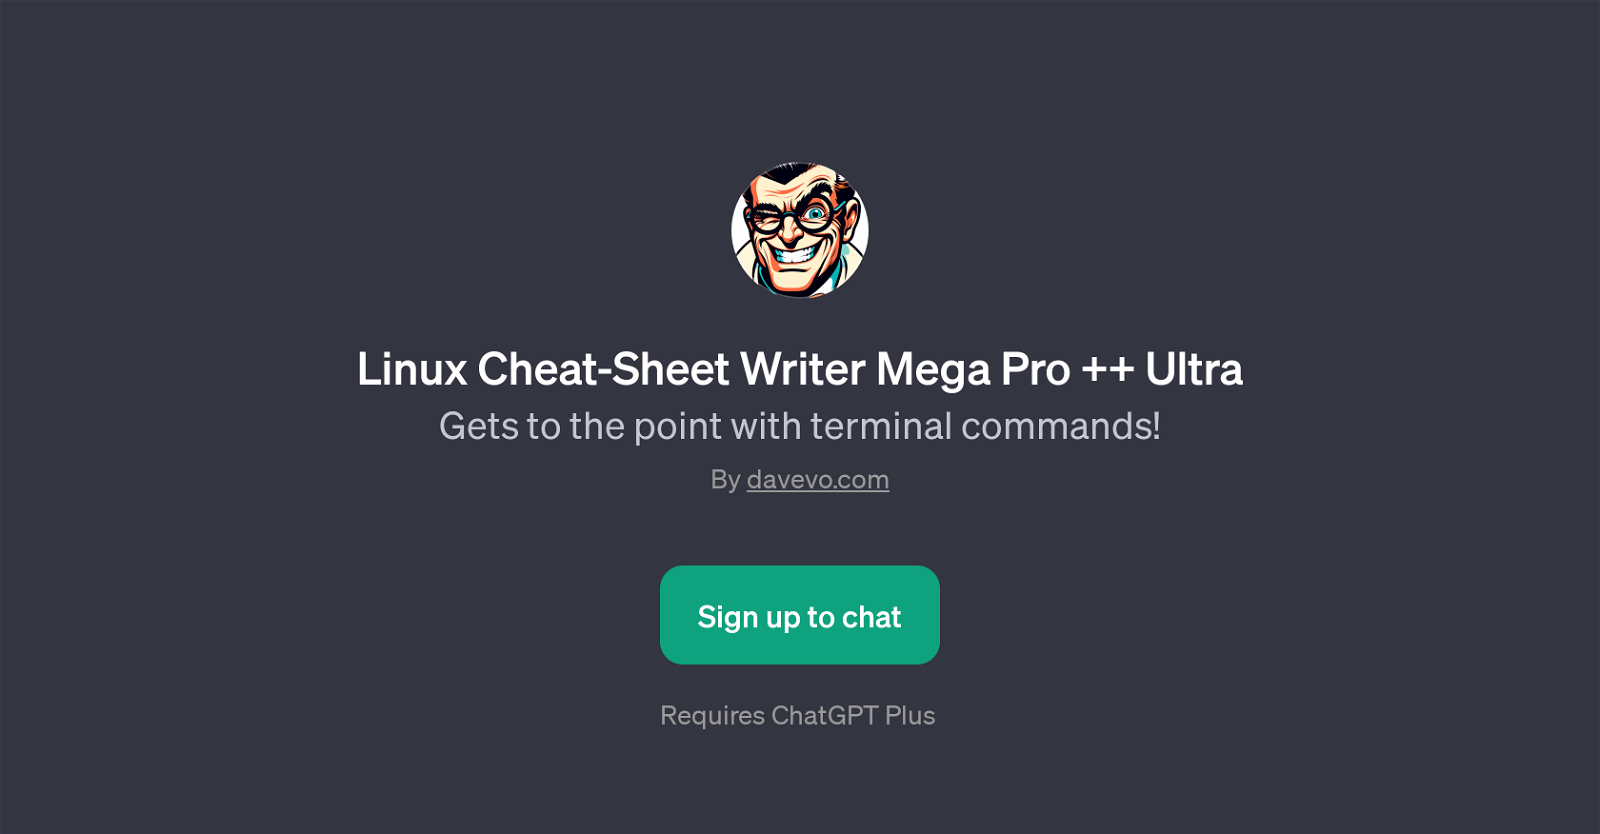 Linux Cheat-Sheet Writer Mega Pro ++ Ultra website